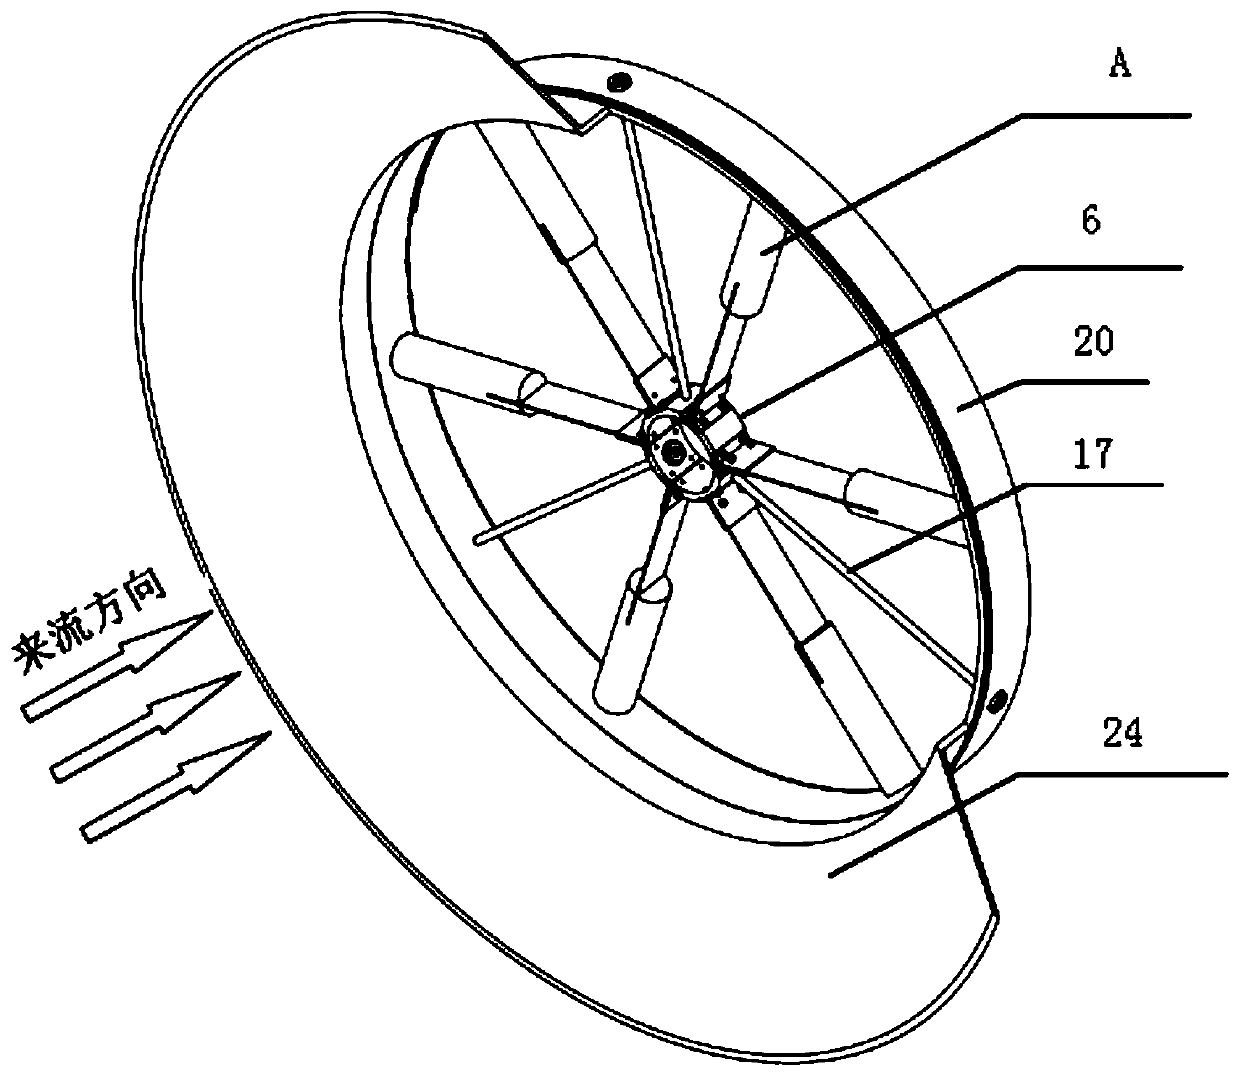 Modular directional flow pipeline type piezoelectric energy harvester arranged in a circumferential array